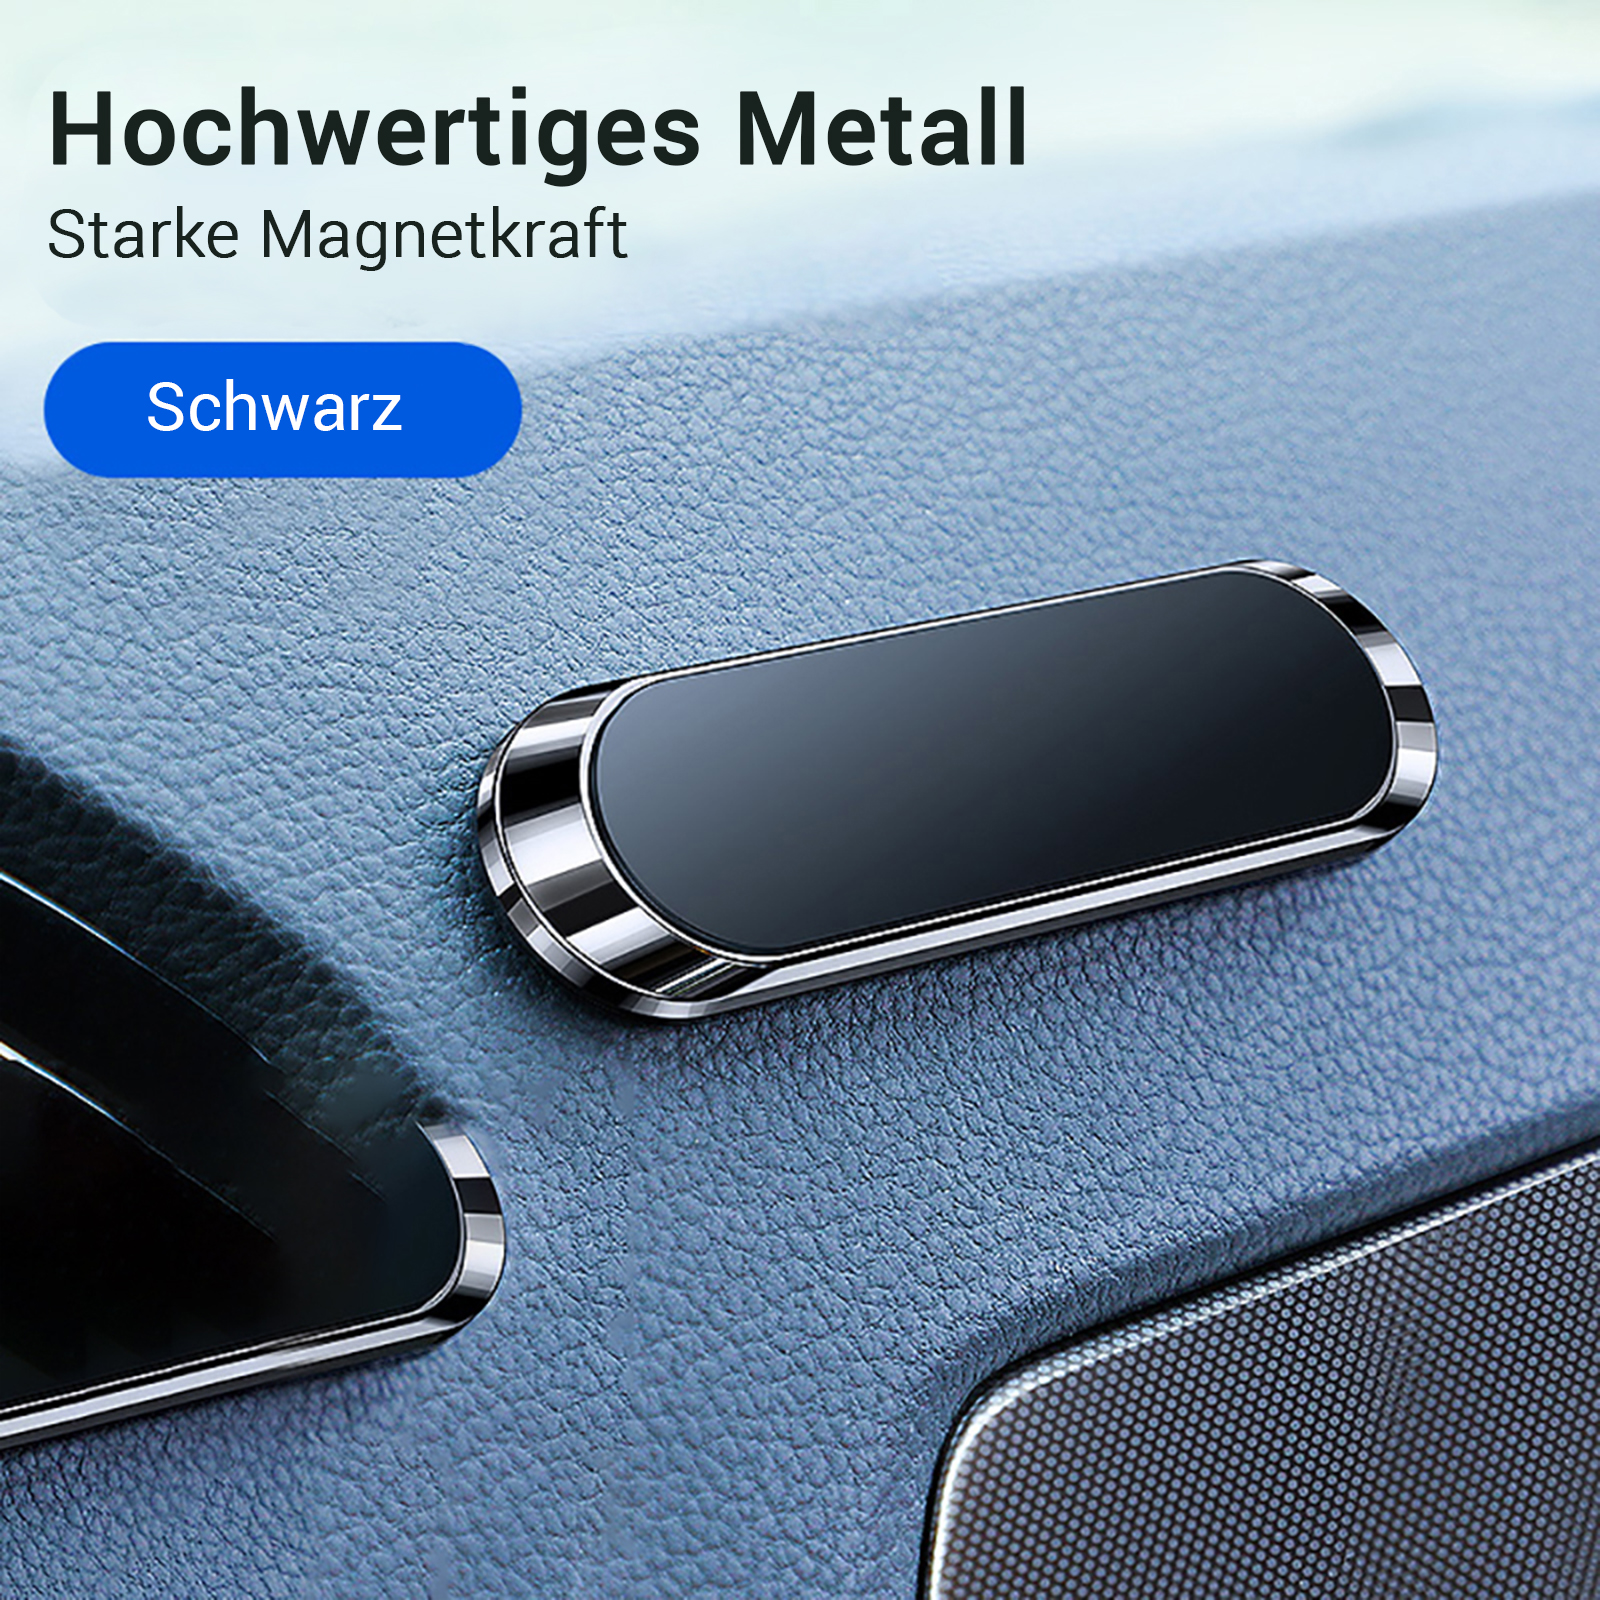 Magnetische Handyhalterung Auto PKW KFZ Magnet Handy Halter Smartphone  Telefon (314087072339) - купить на .de (Германия) с доставкой в Украину